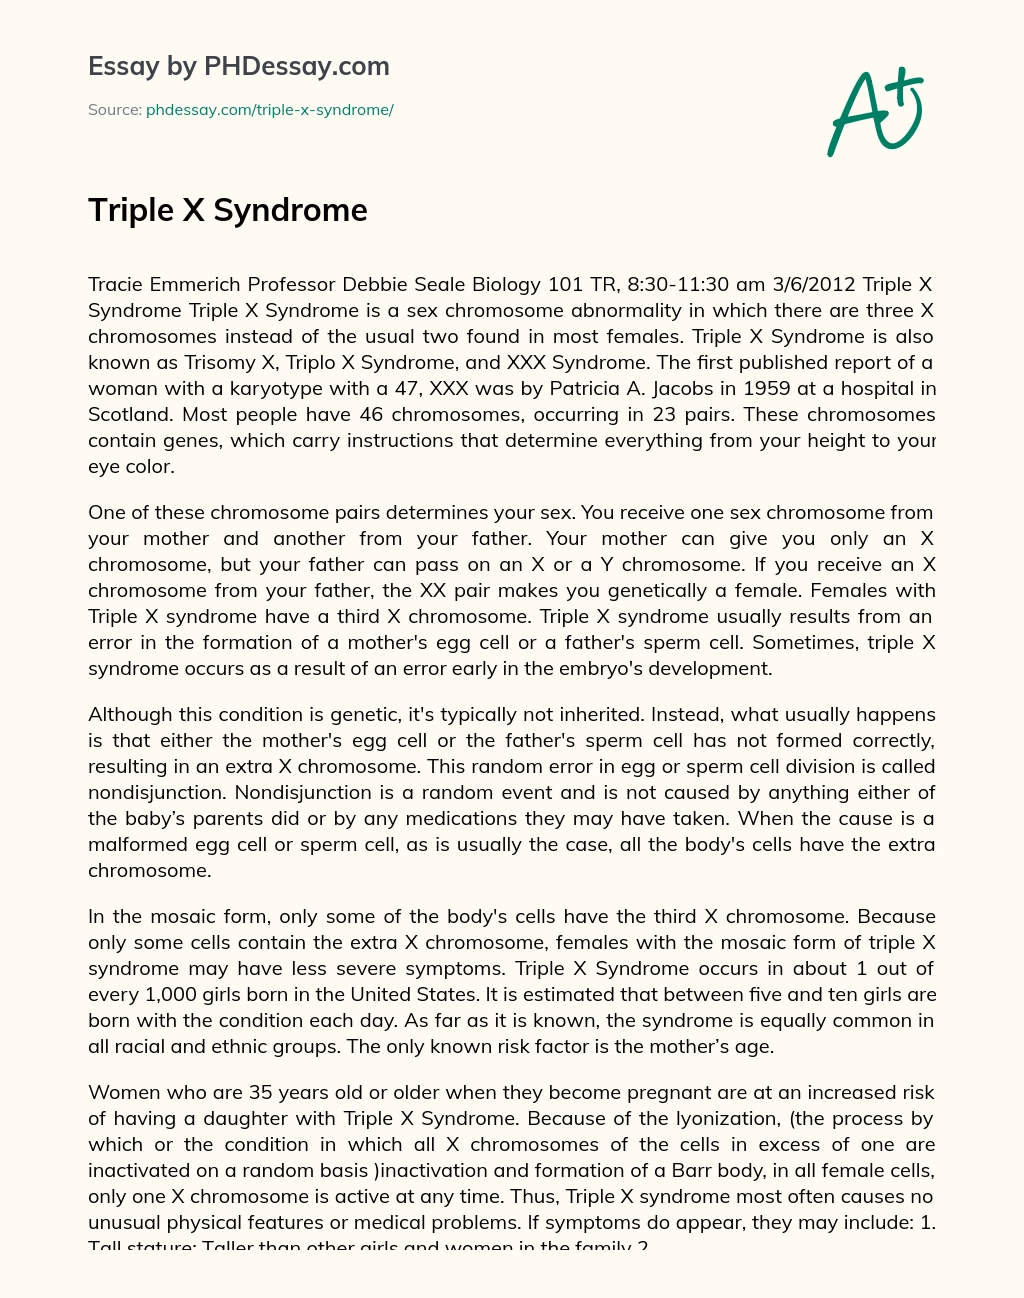 Triple X Syndrome essay